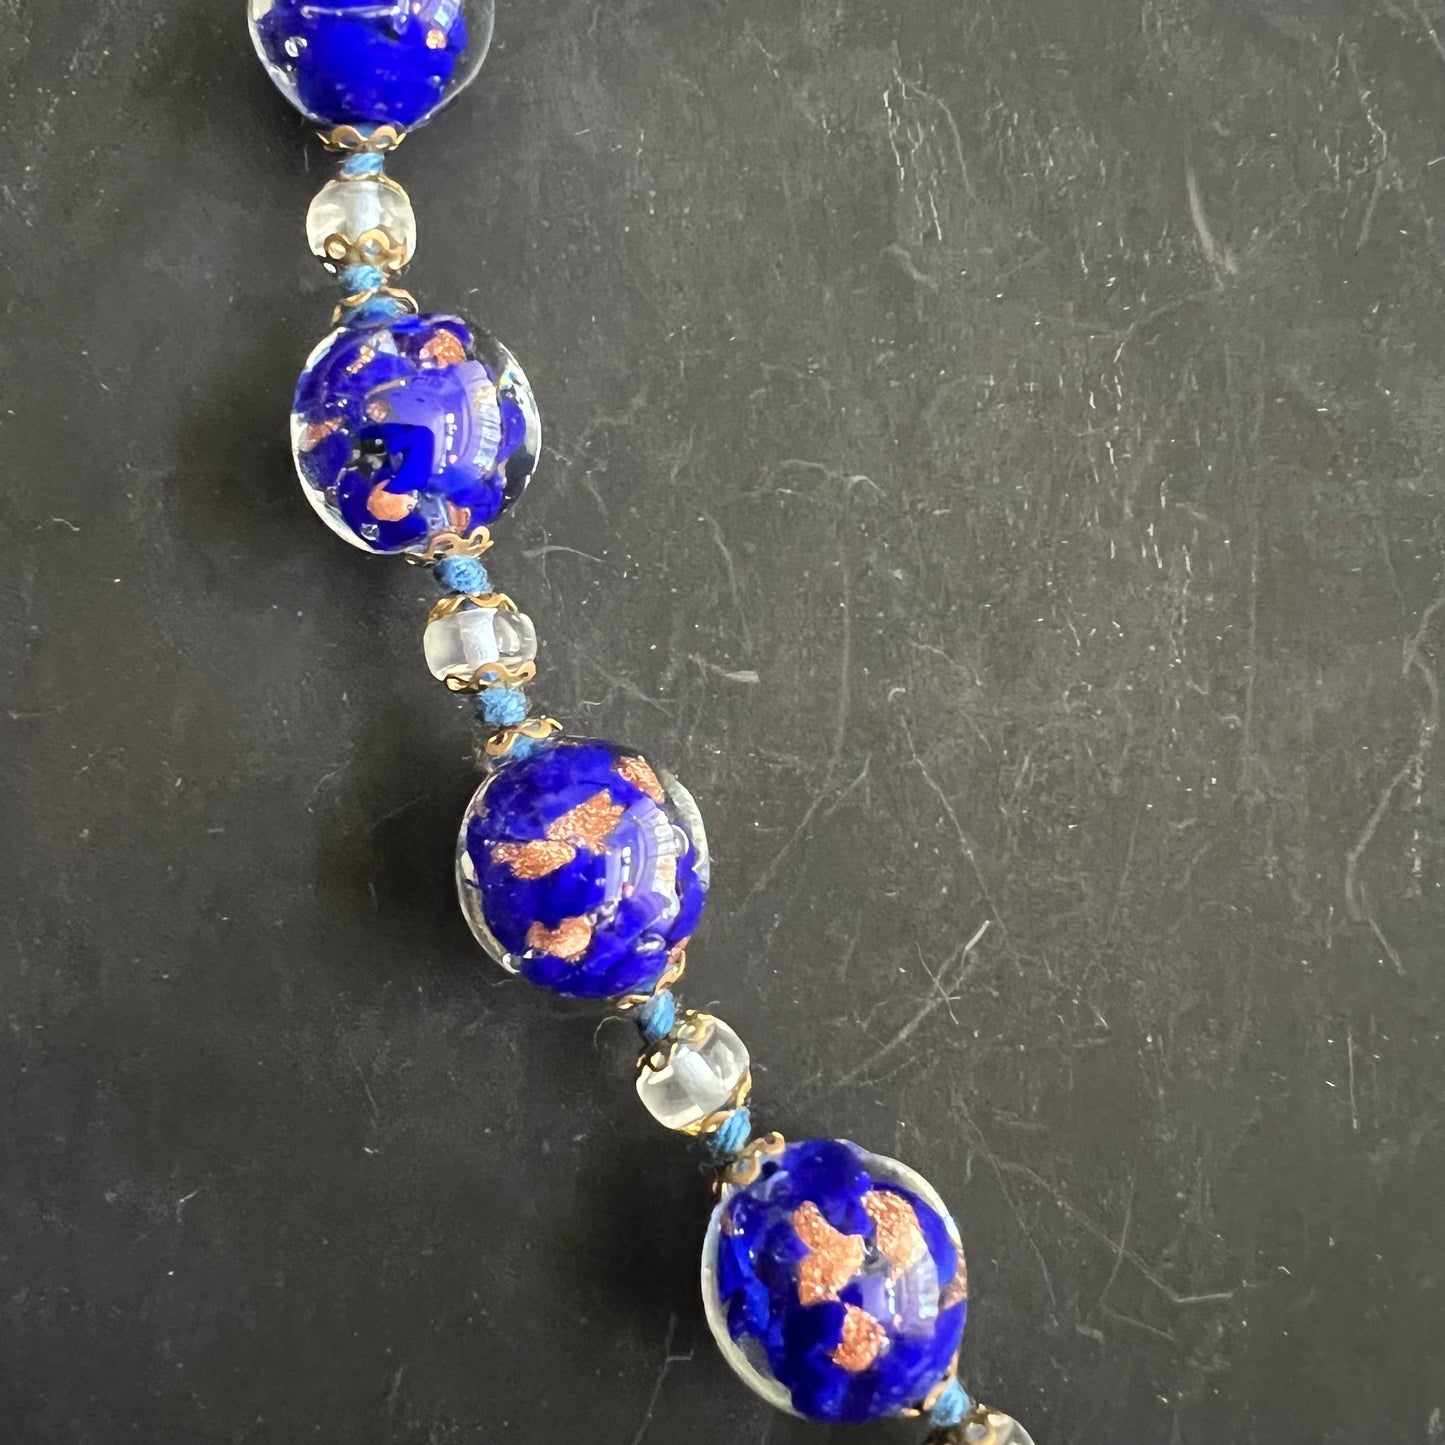 Vintage Venetian Glass Beads Necklace